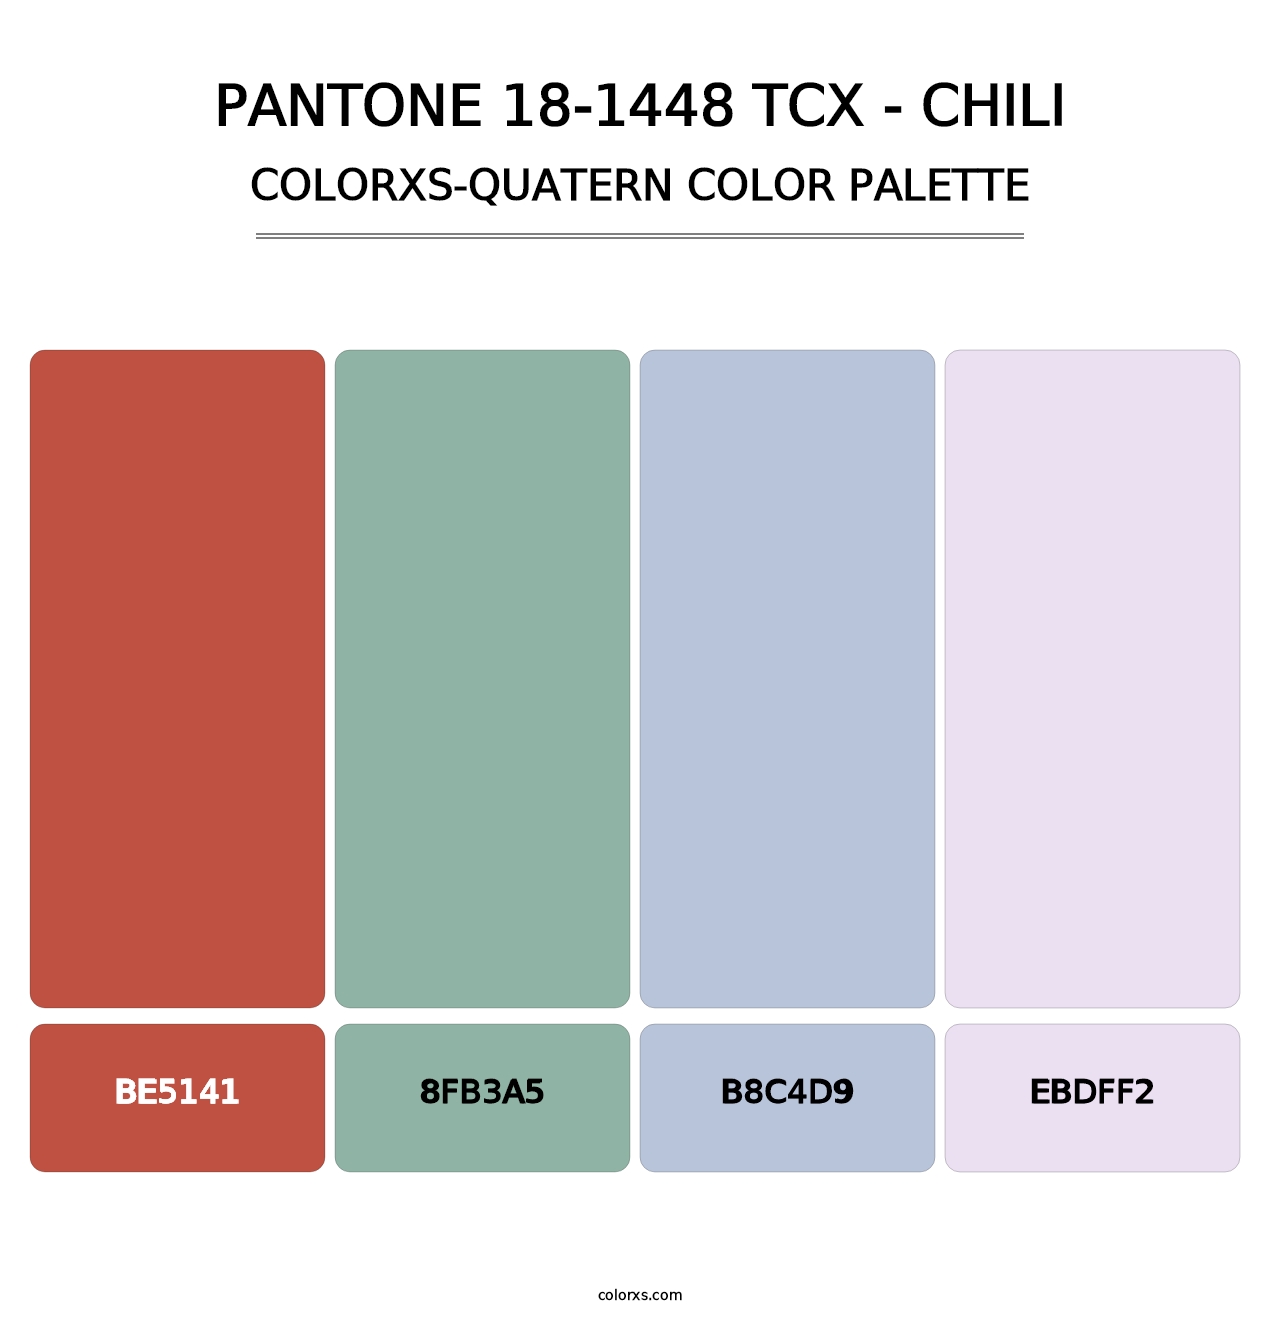 PANTONE 18-1448 TCX - Chili - Colorxs Quatern Palette